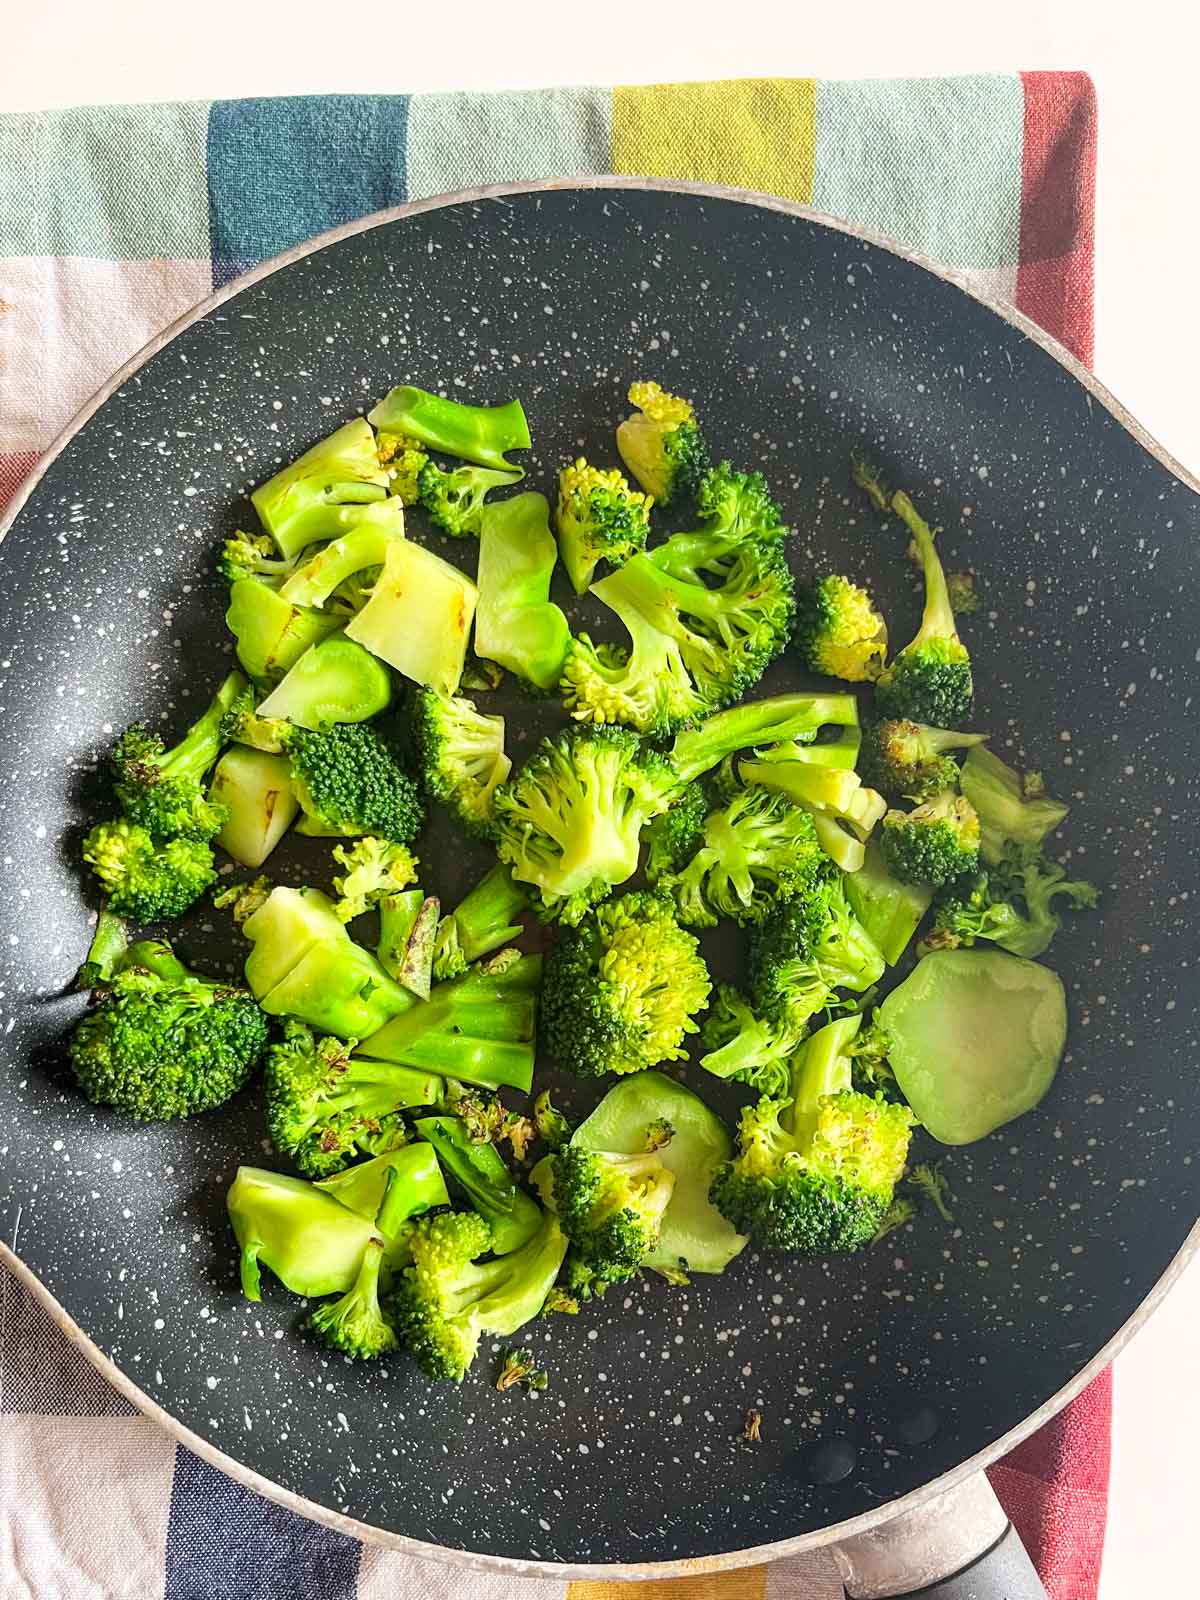 Stir-fried broccoli in a small pan.